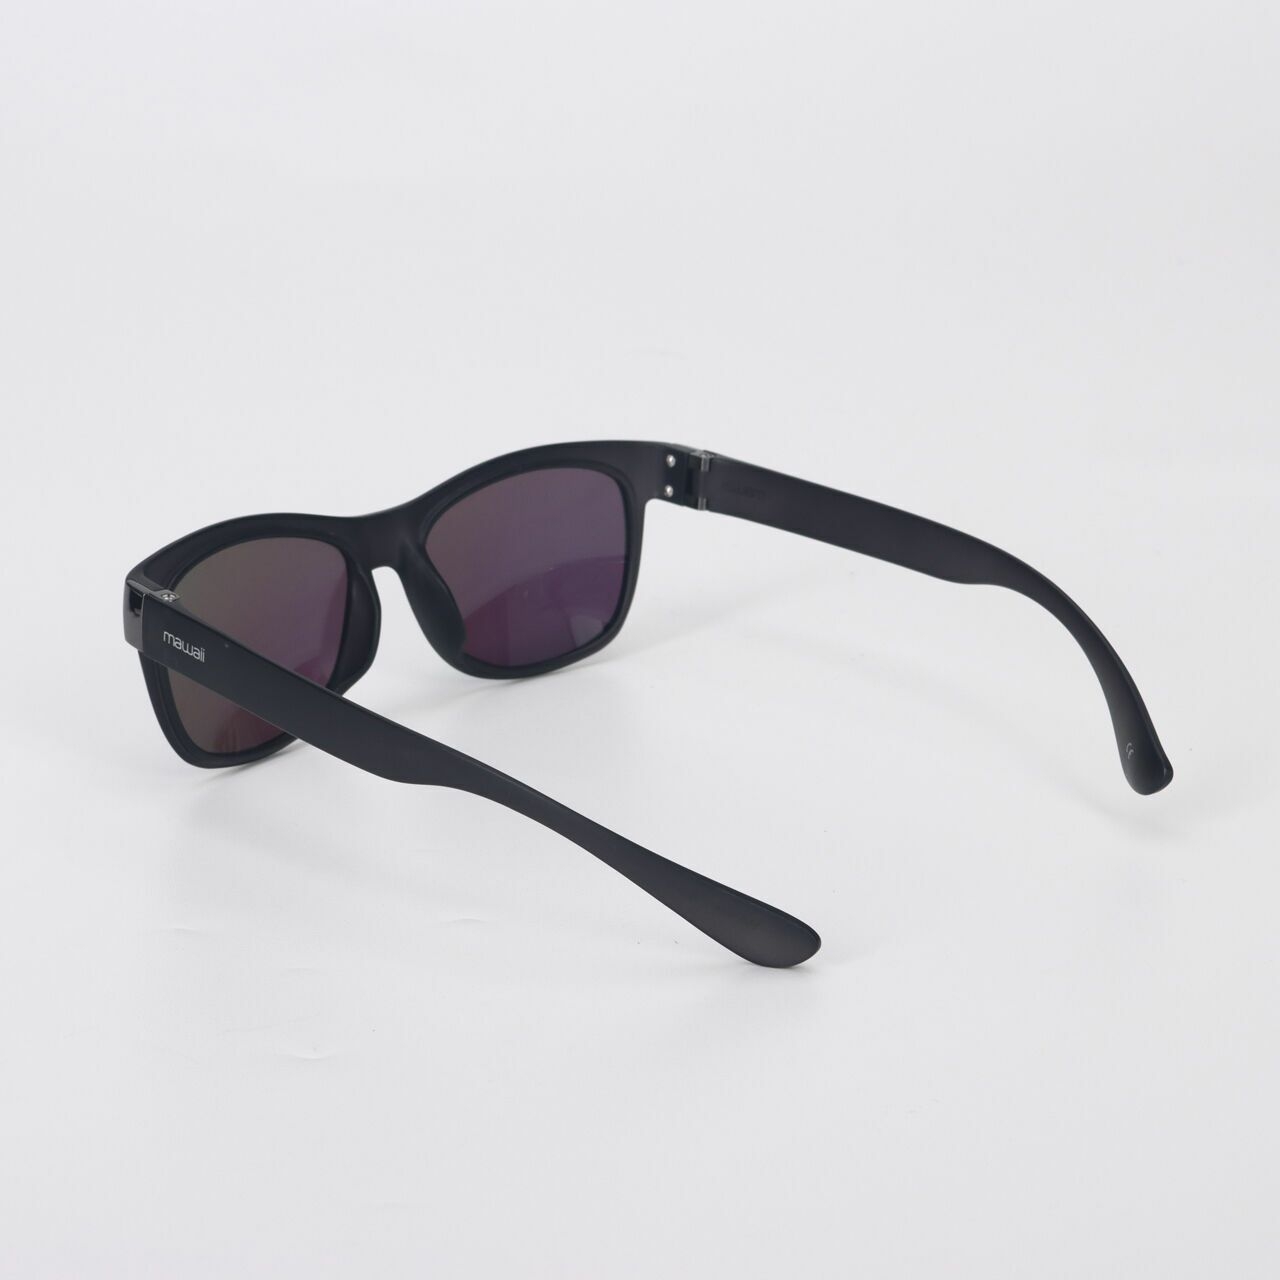 Mawaii Black Sunglasses